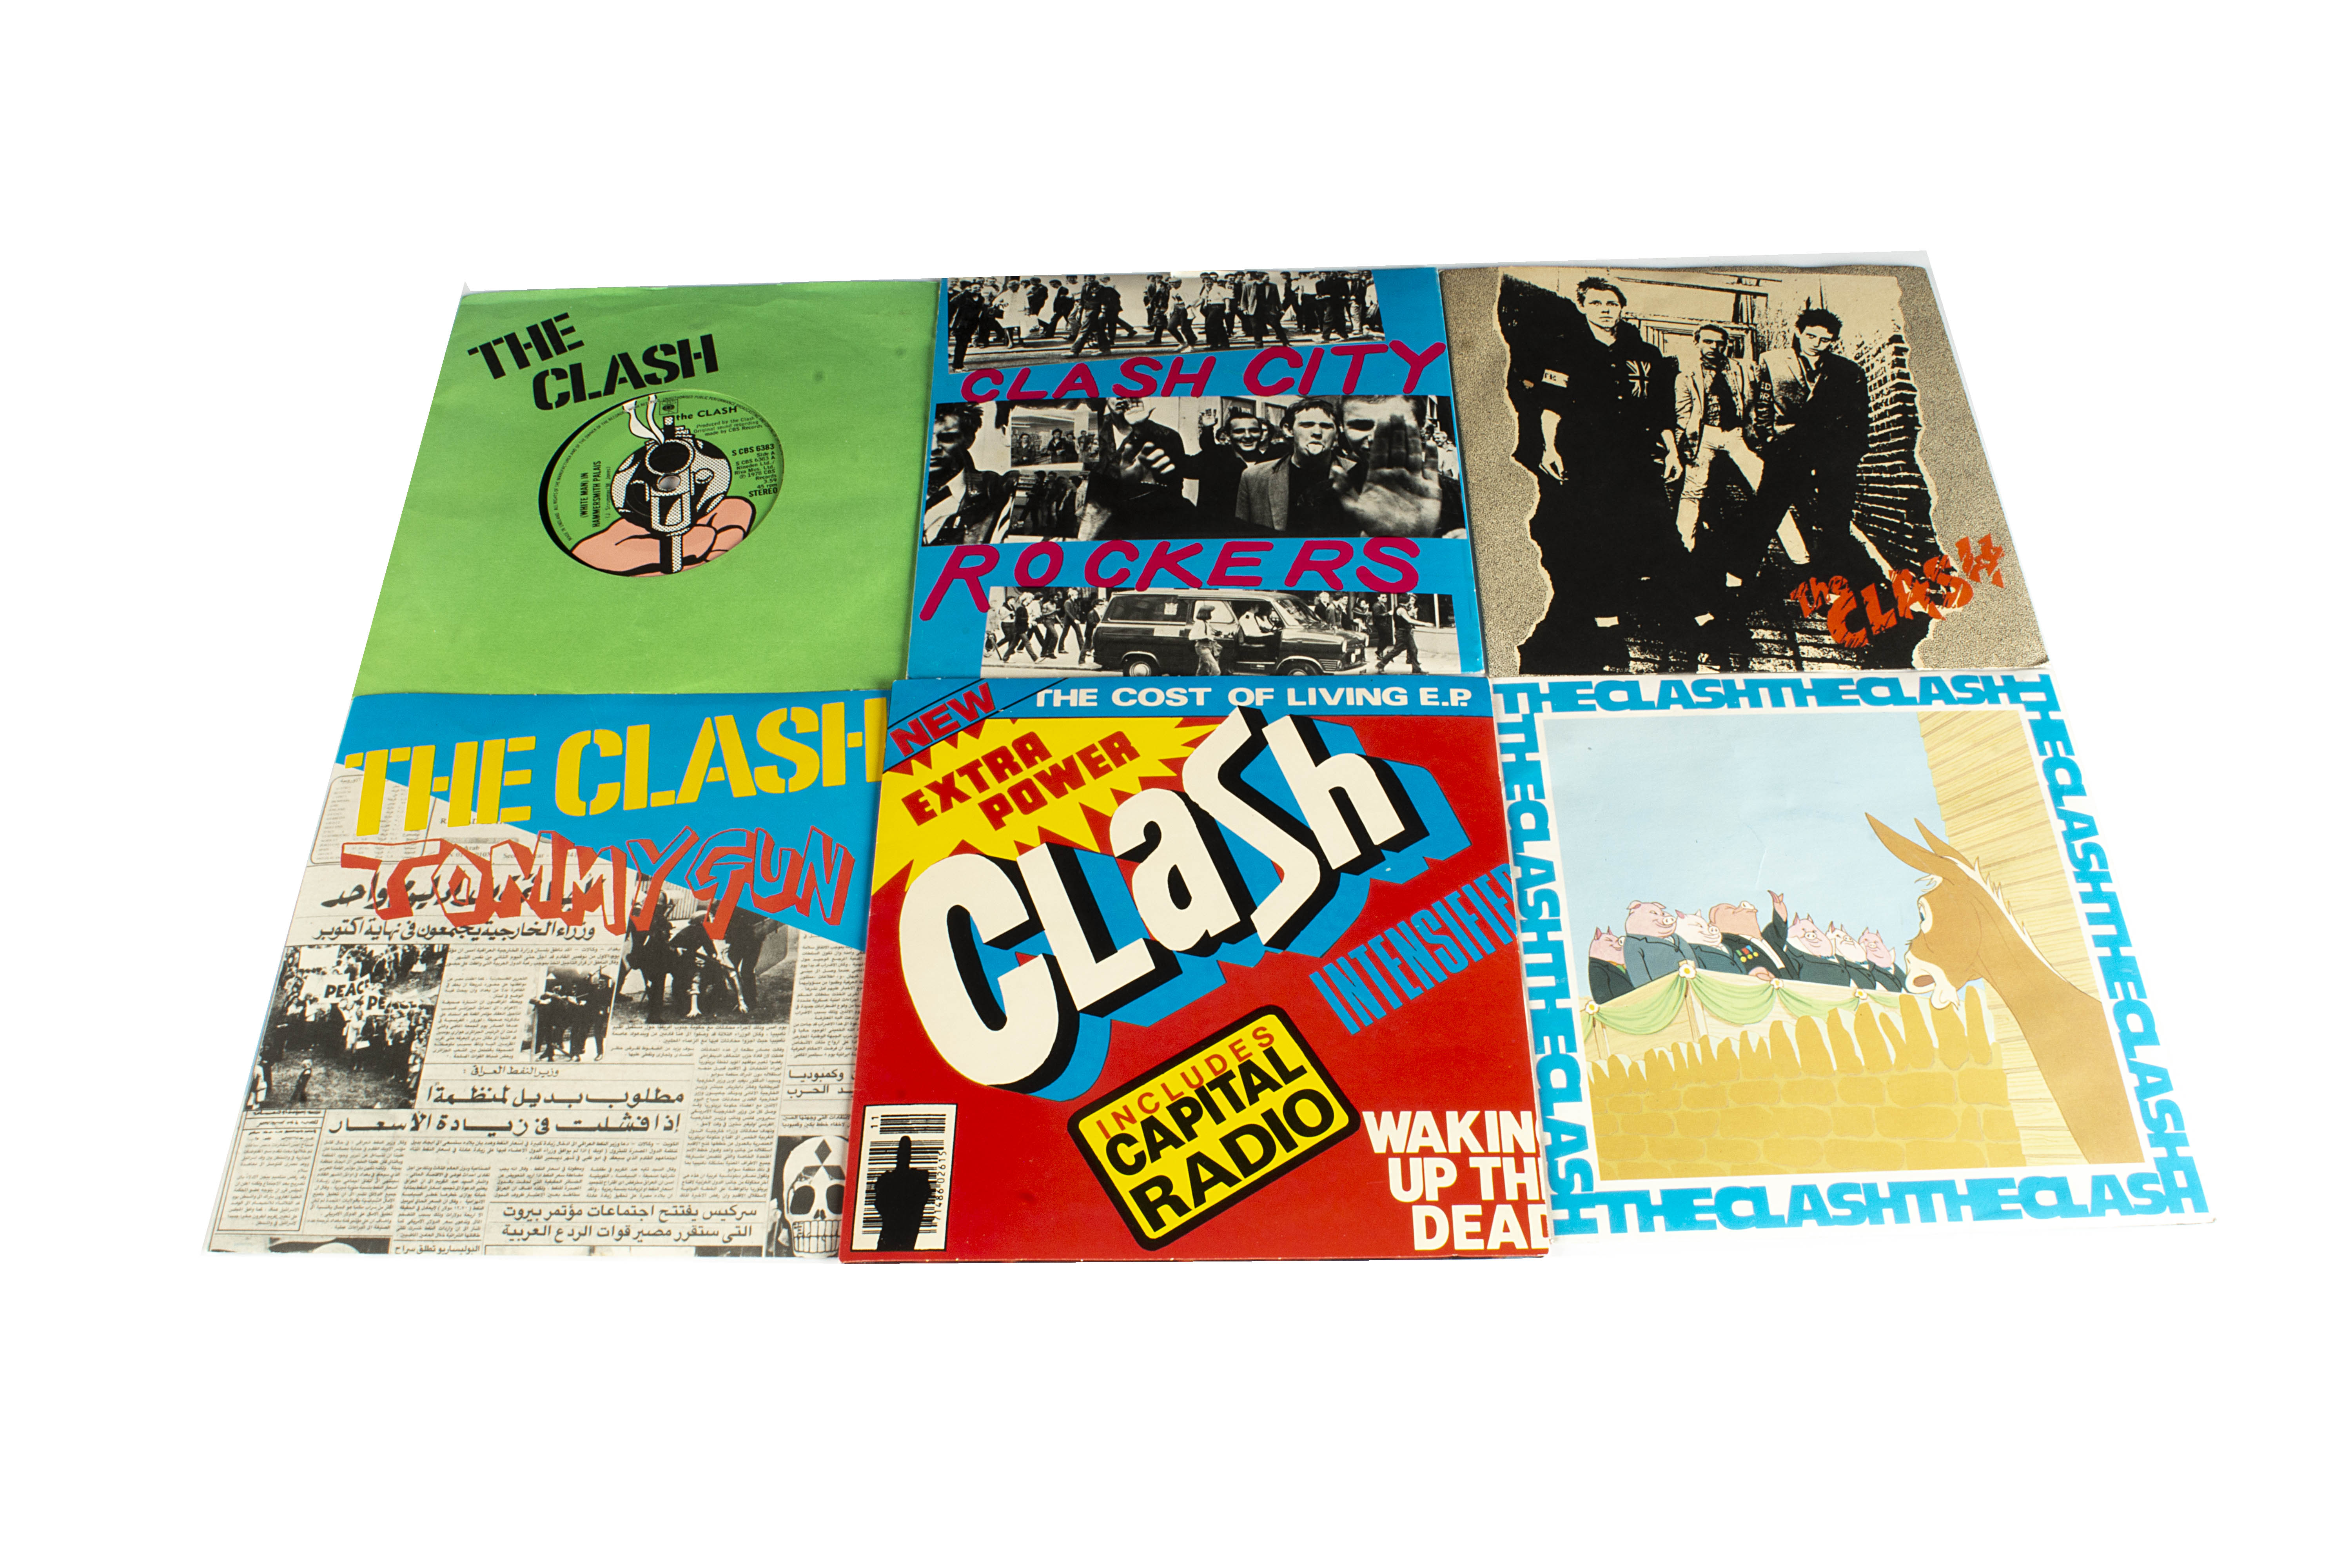 Clash 7" Singles, thirteen singles comprising White Riot, Remote Control, Complete Control, Clash